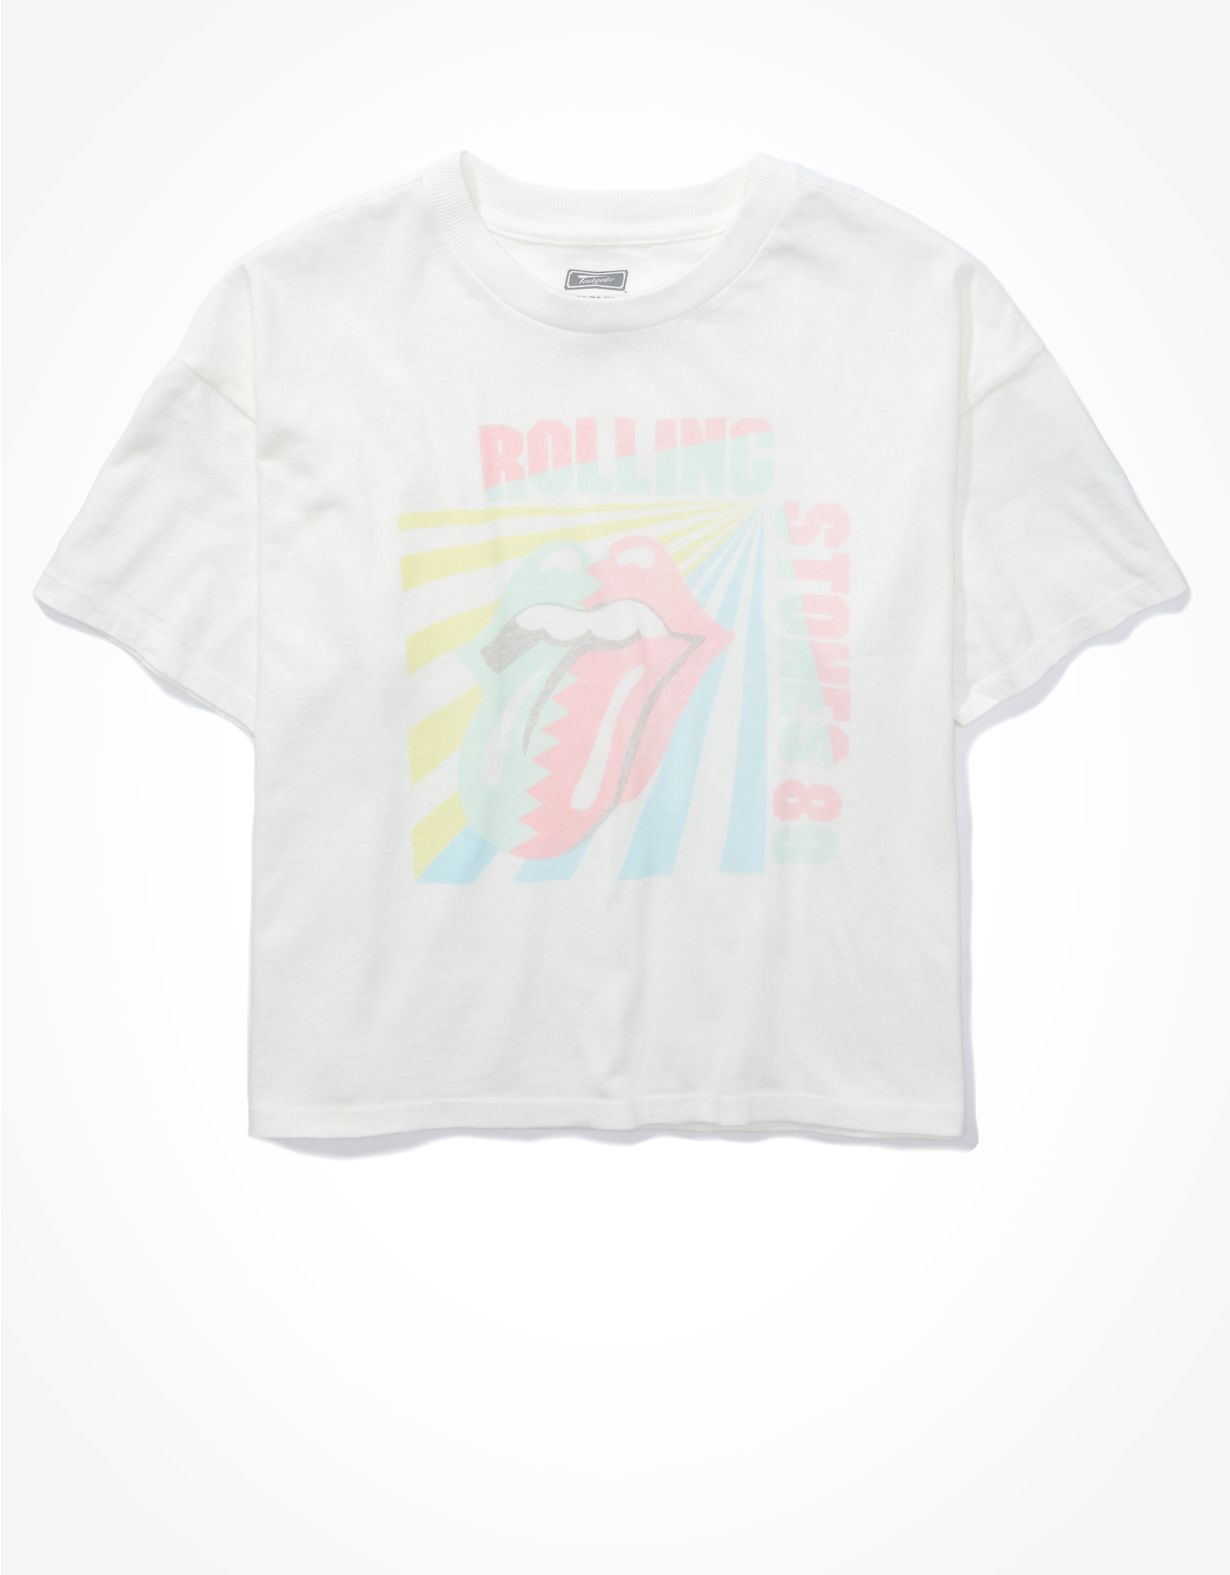 Tailgate Women's Rolling Stones Tour T-Shirt